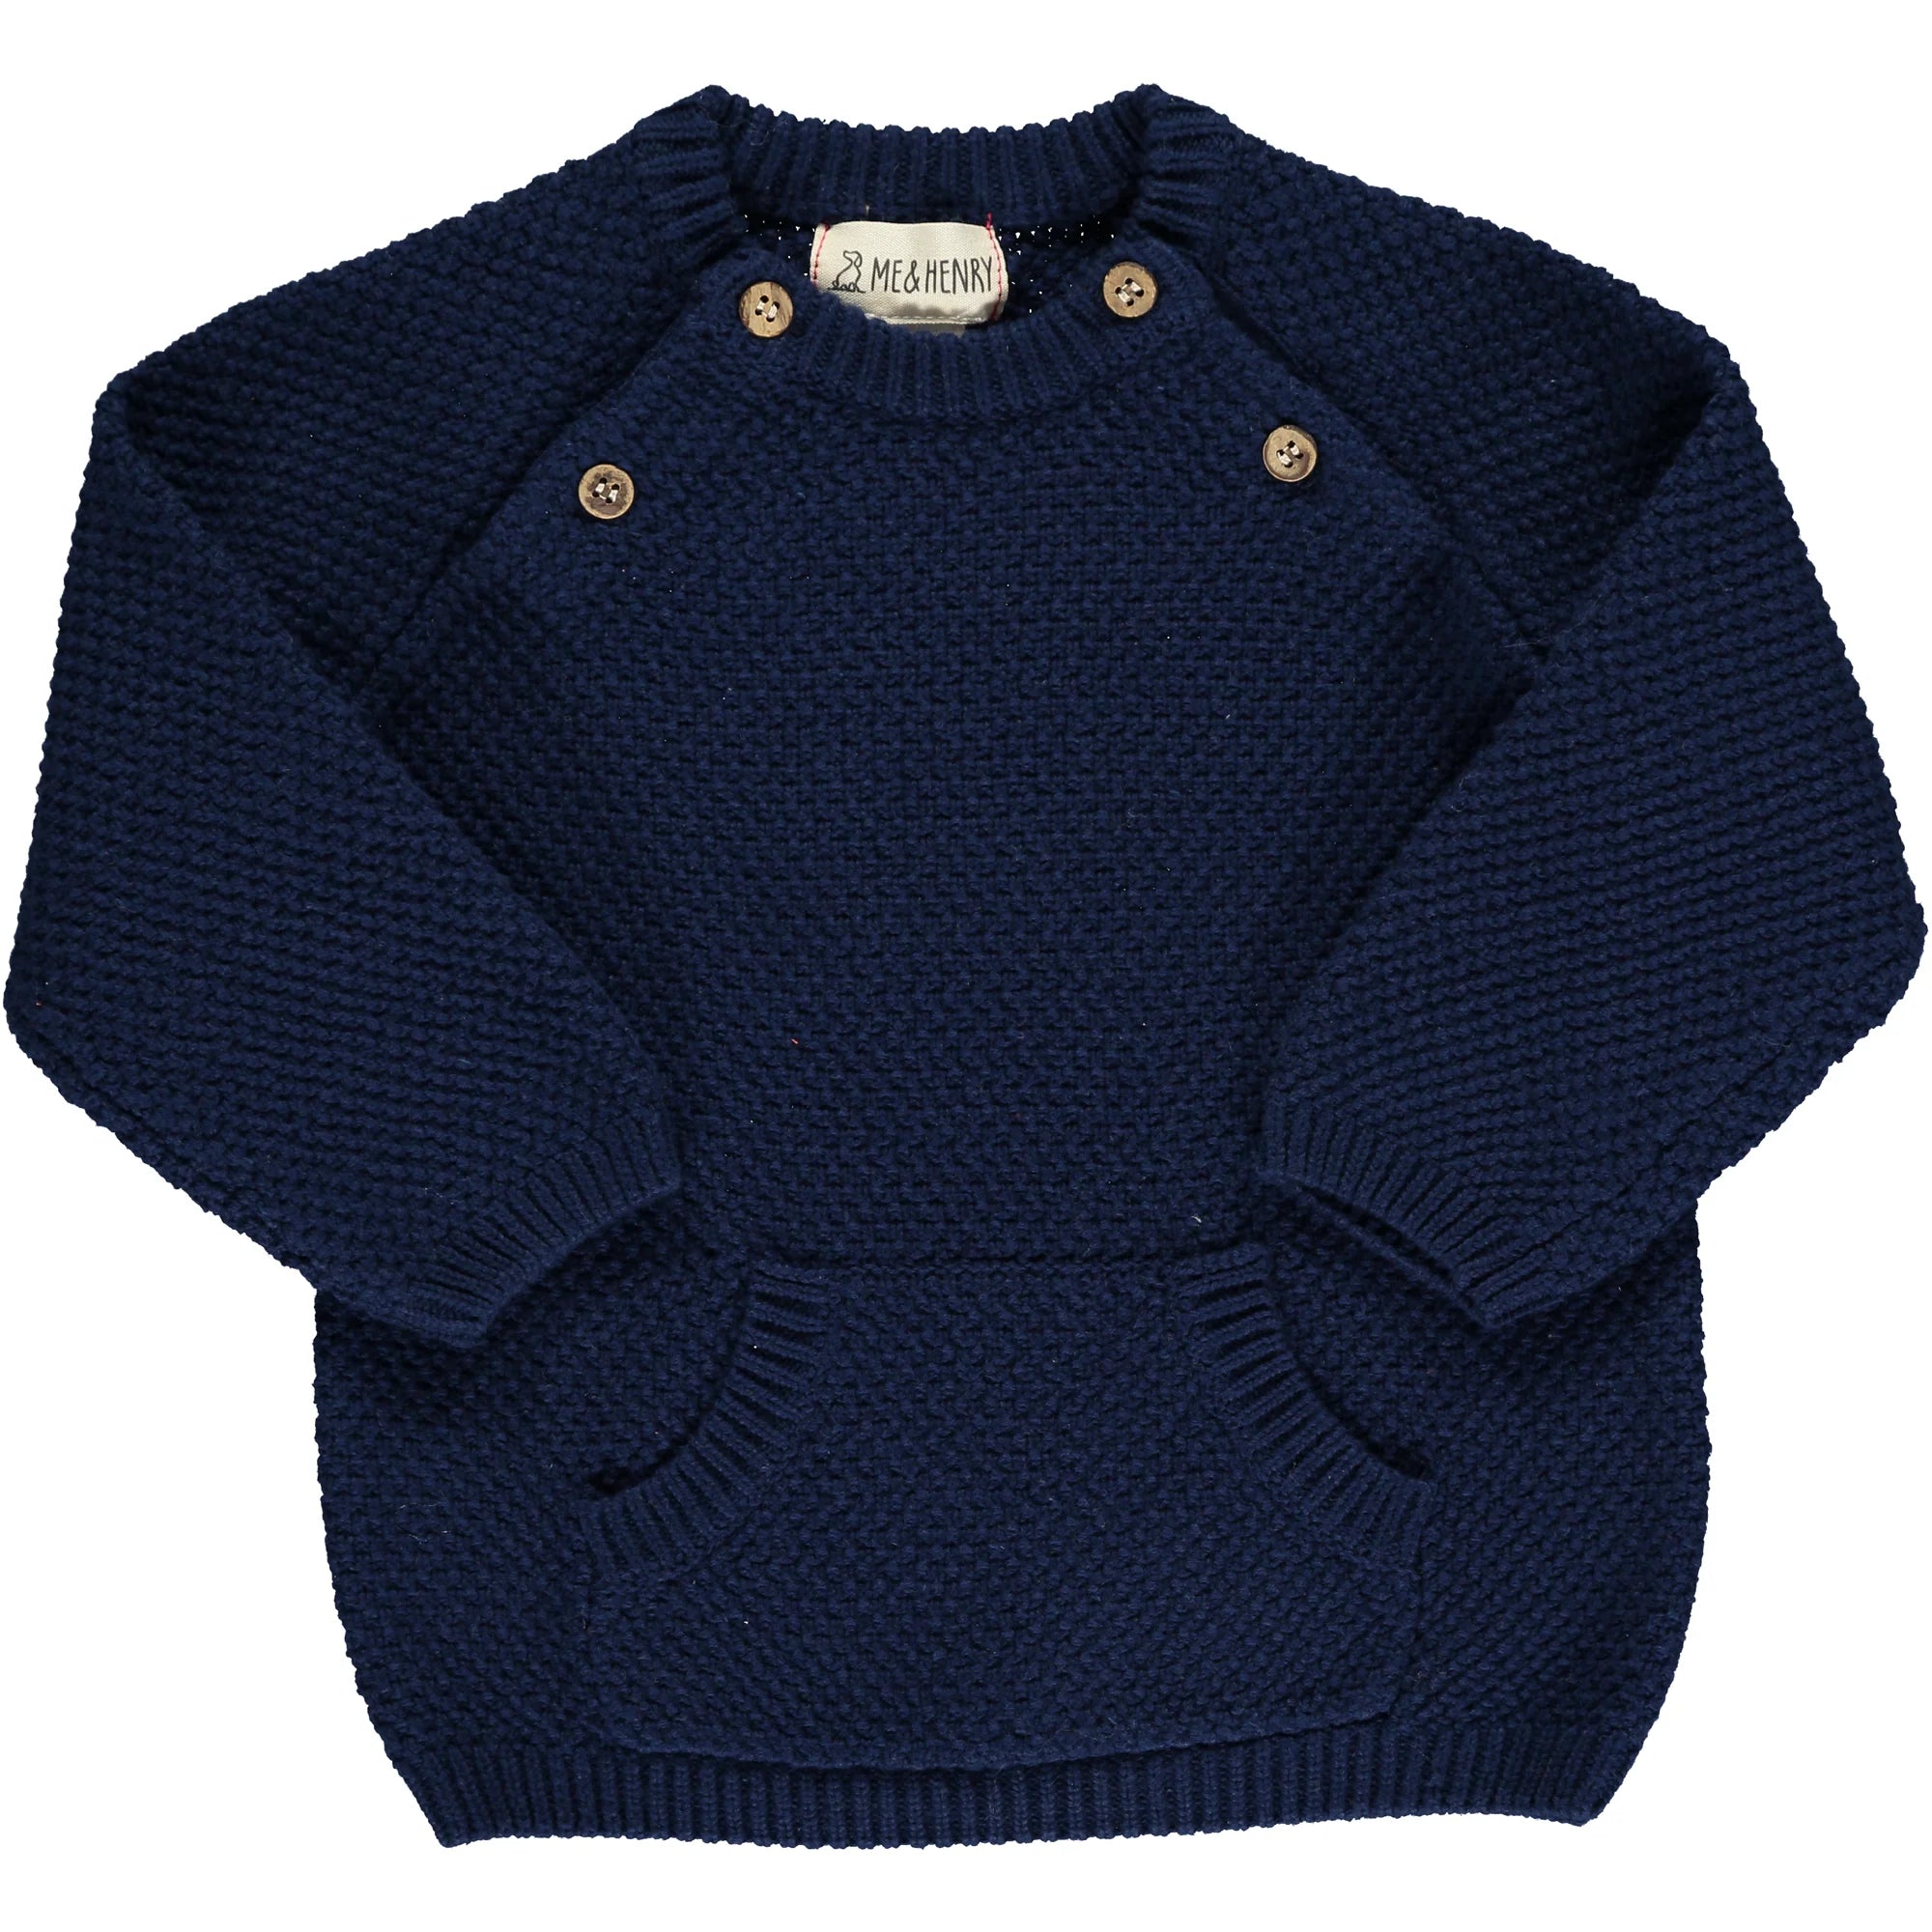 Morrison Baby Sweater - Navy